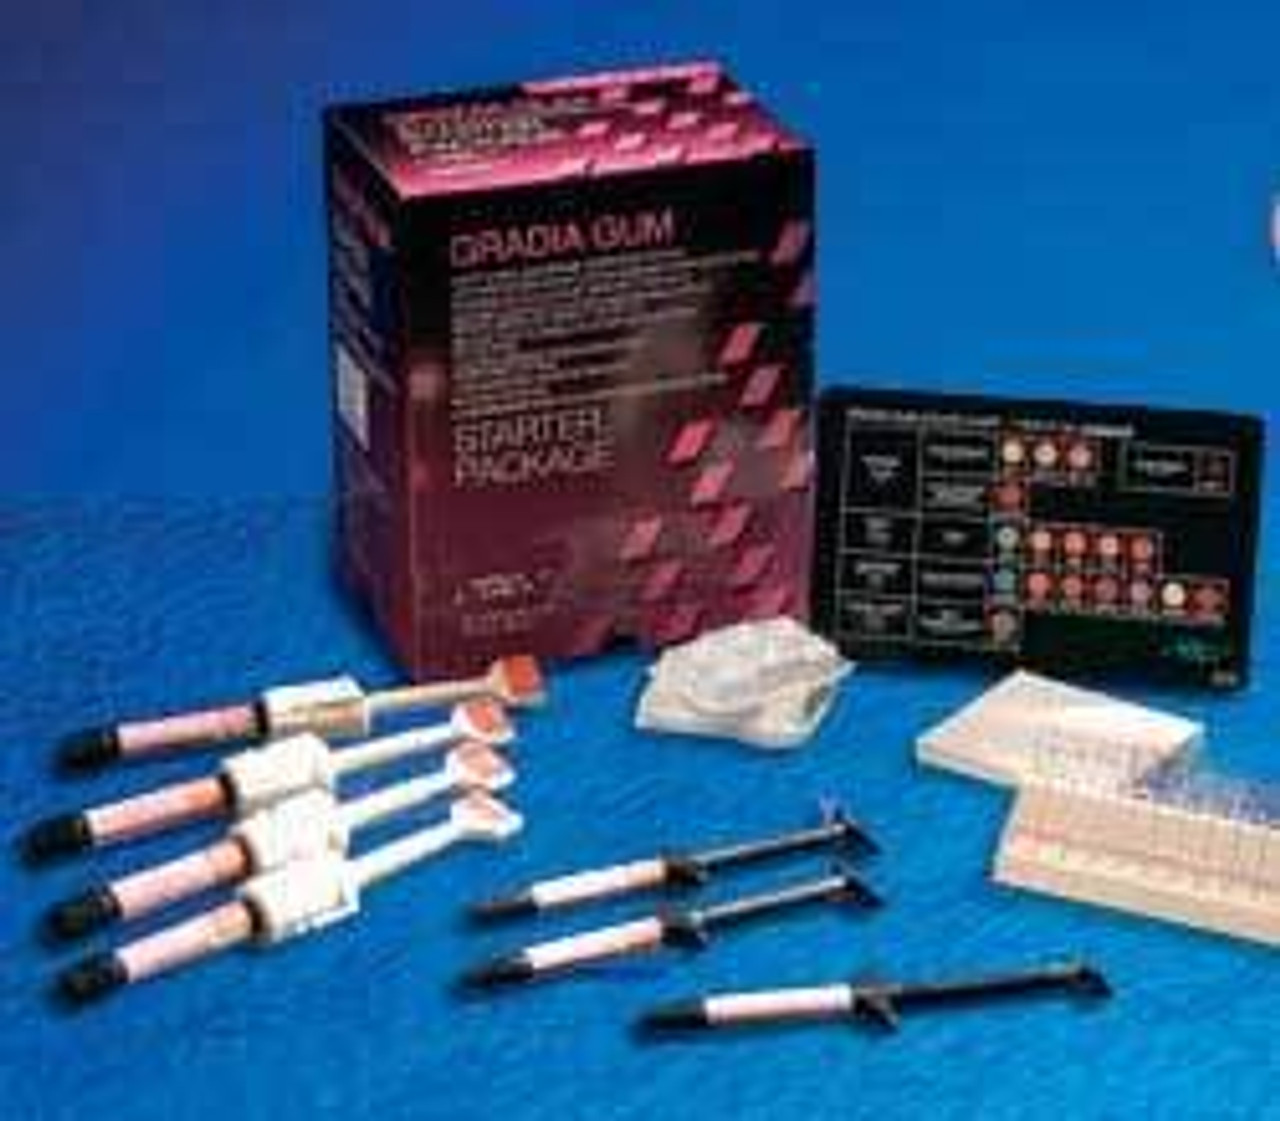 GC Gradia Gum G23-2.9 ml